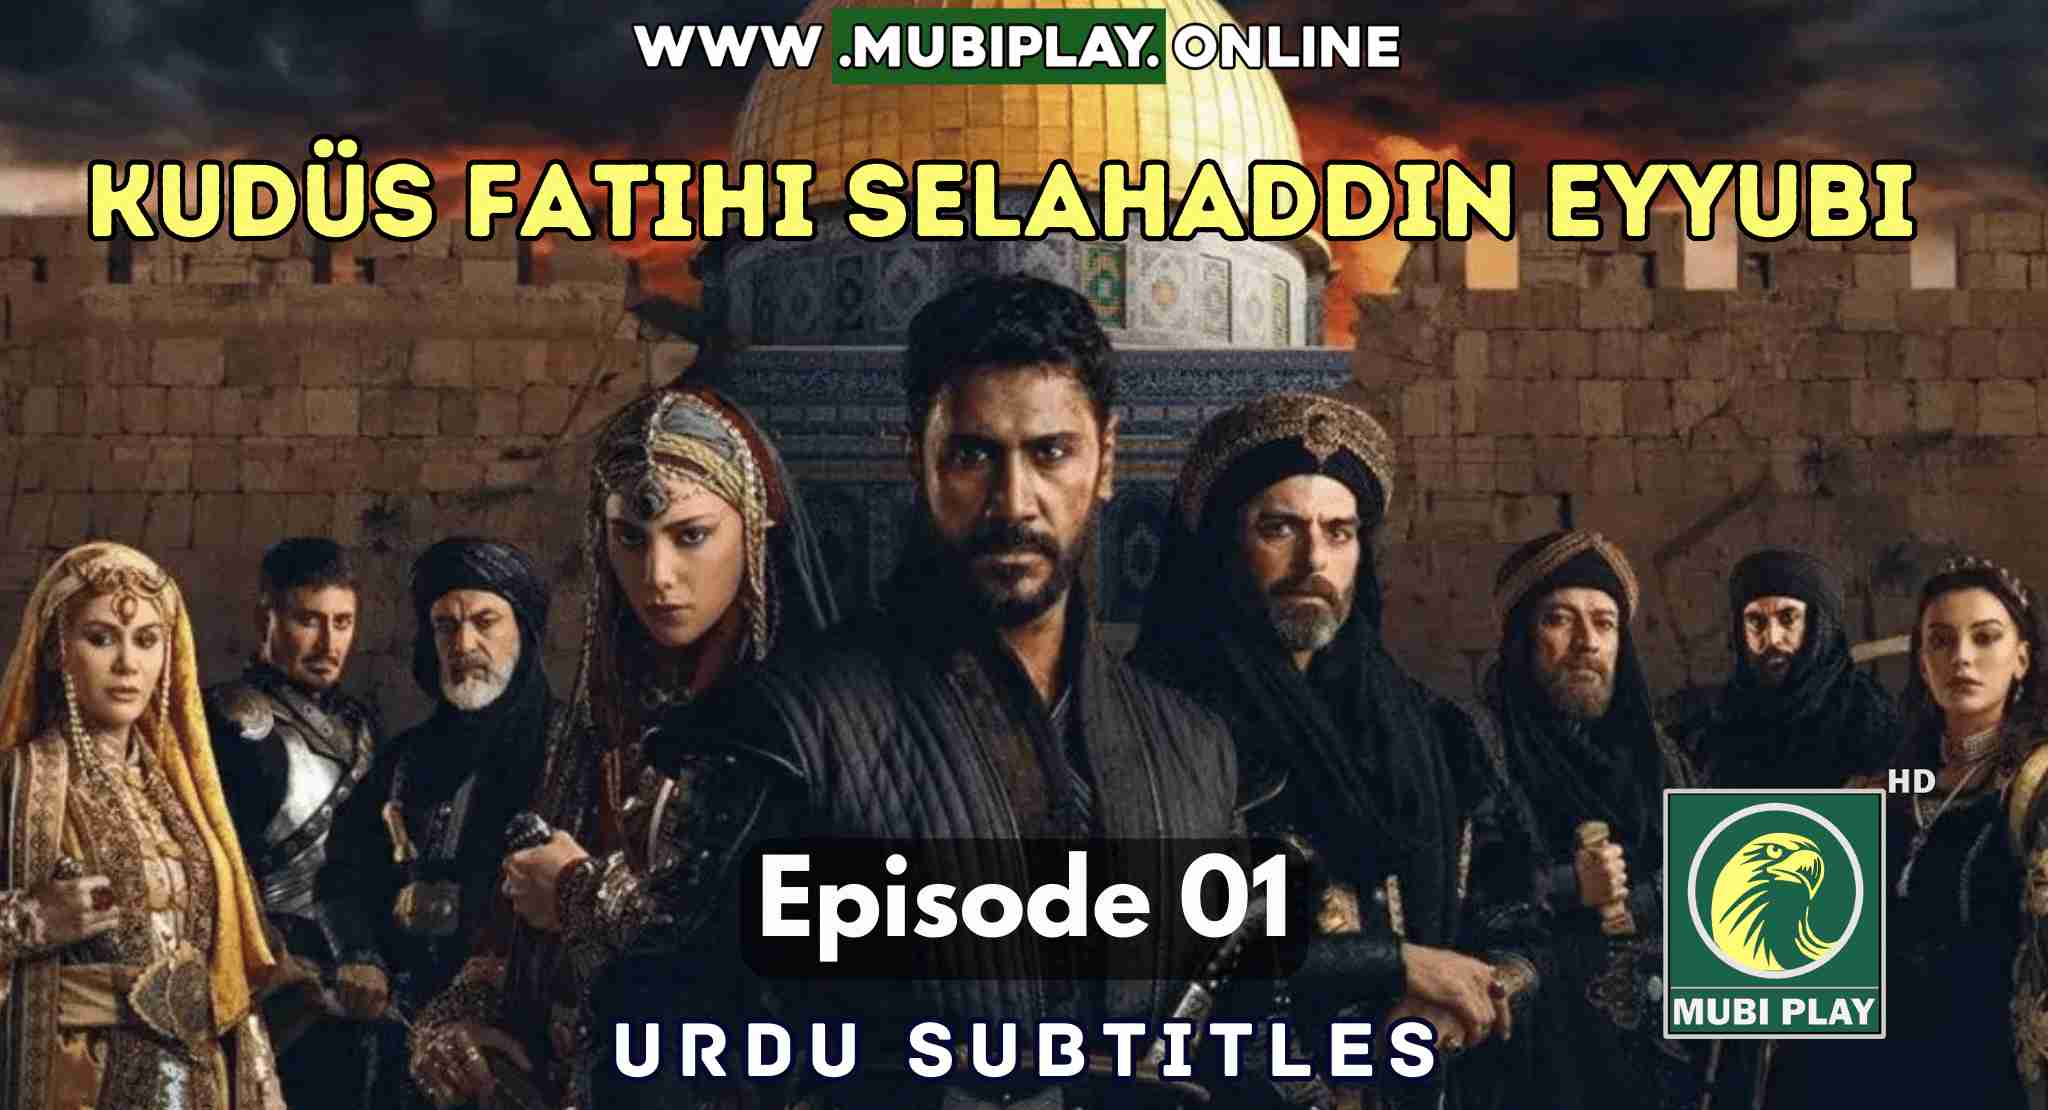 Kudüs Fatihi Selahaddin Eyyubi Episode 1 with Urdu Subtitles by Mubi Play